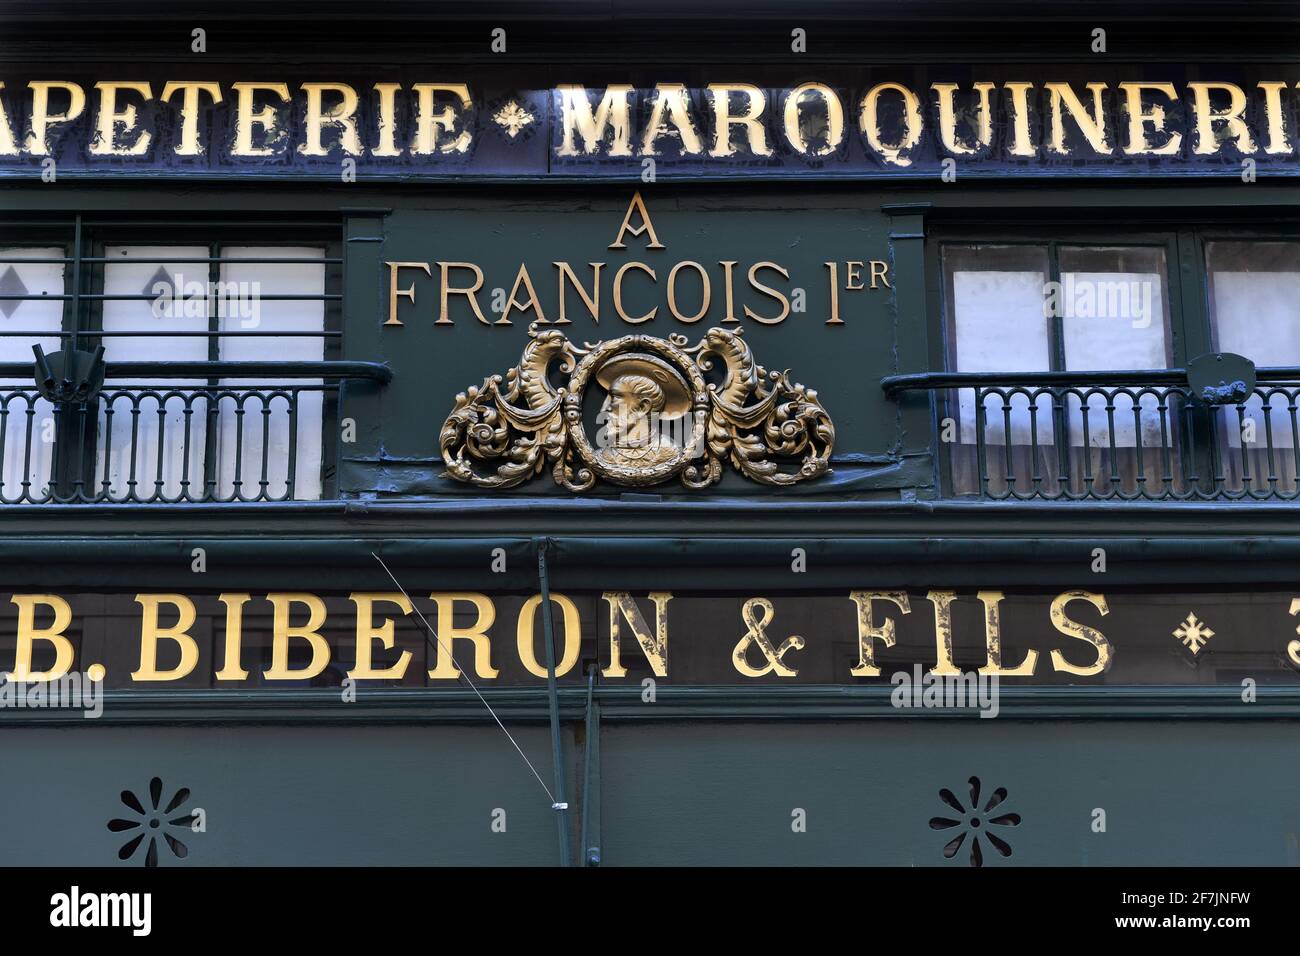 Papeterie Maroquinerie Biberon & Fils - Paris - France Stock Photo - Alamy